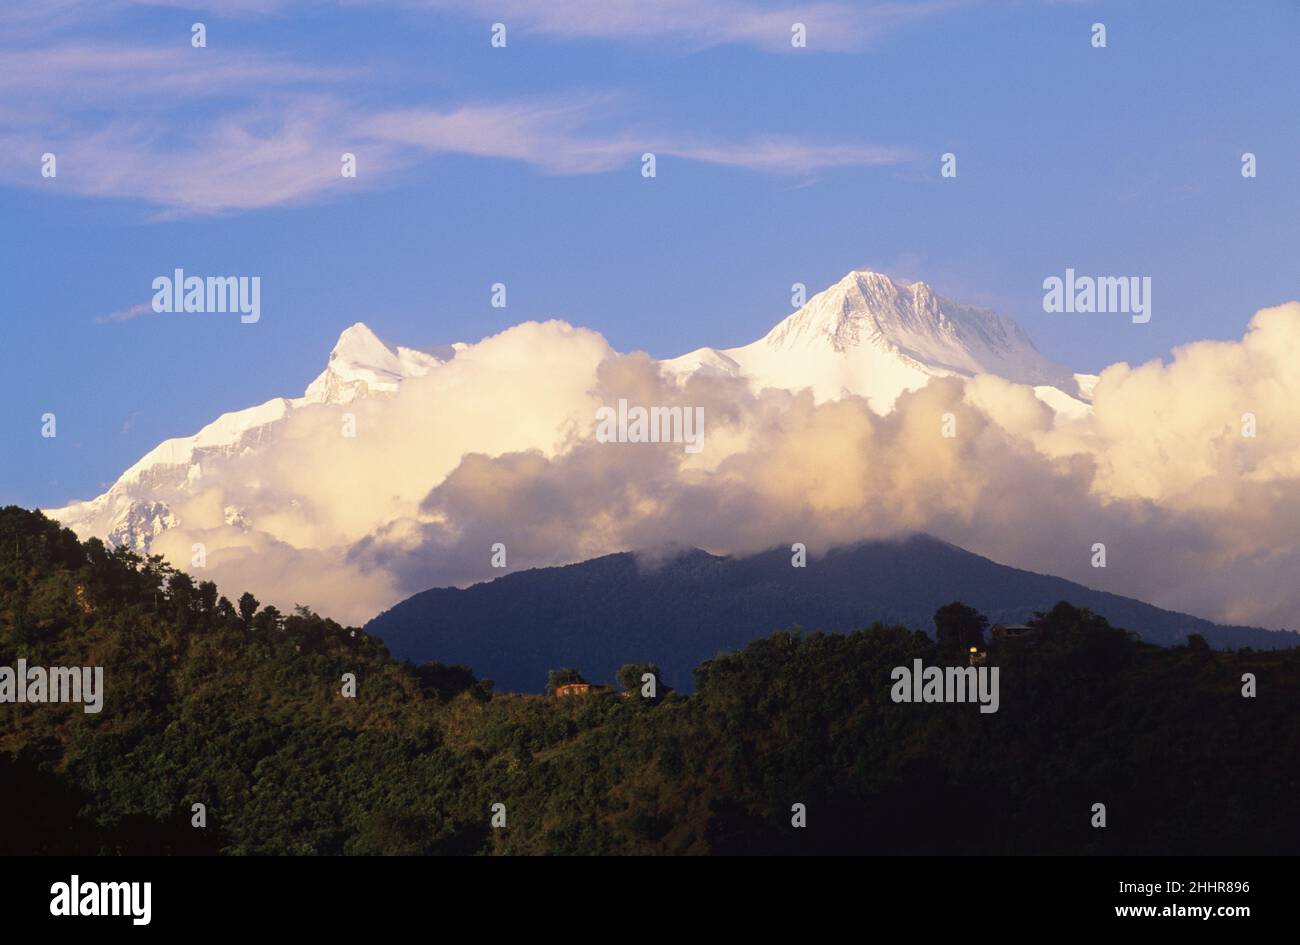 The Annapurna Mountain Range, Nepal Stock Photo